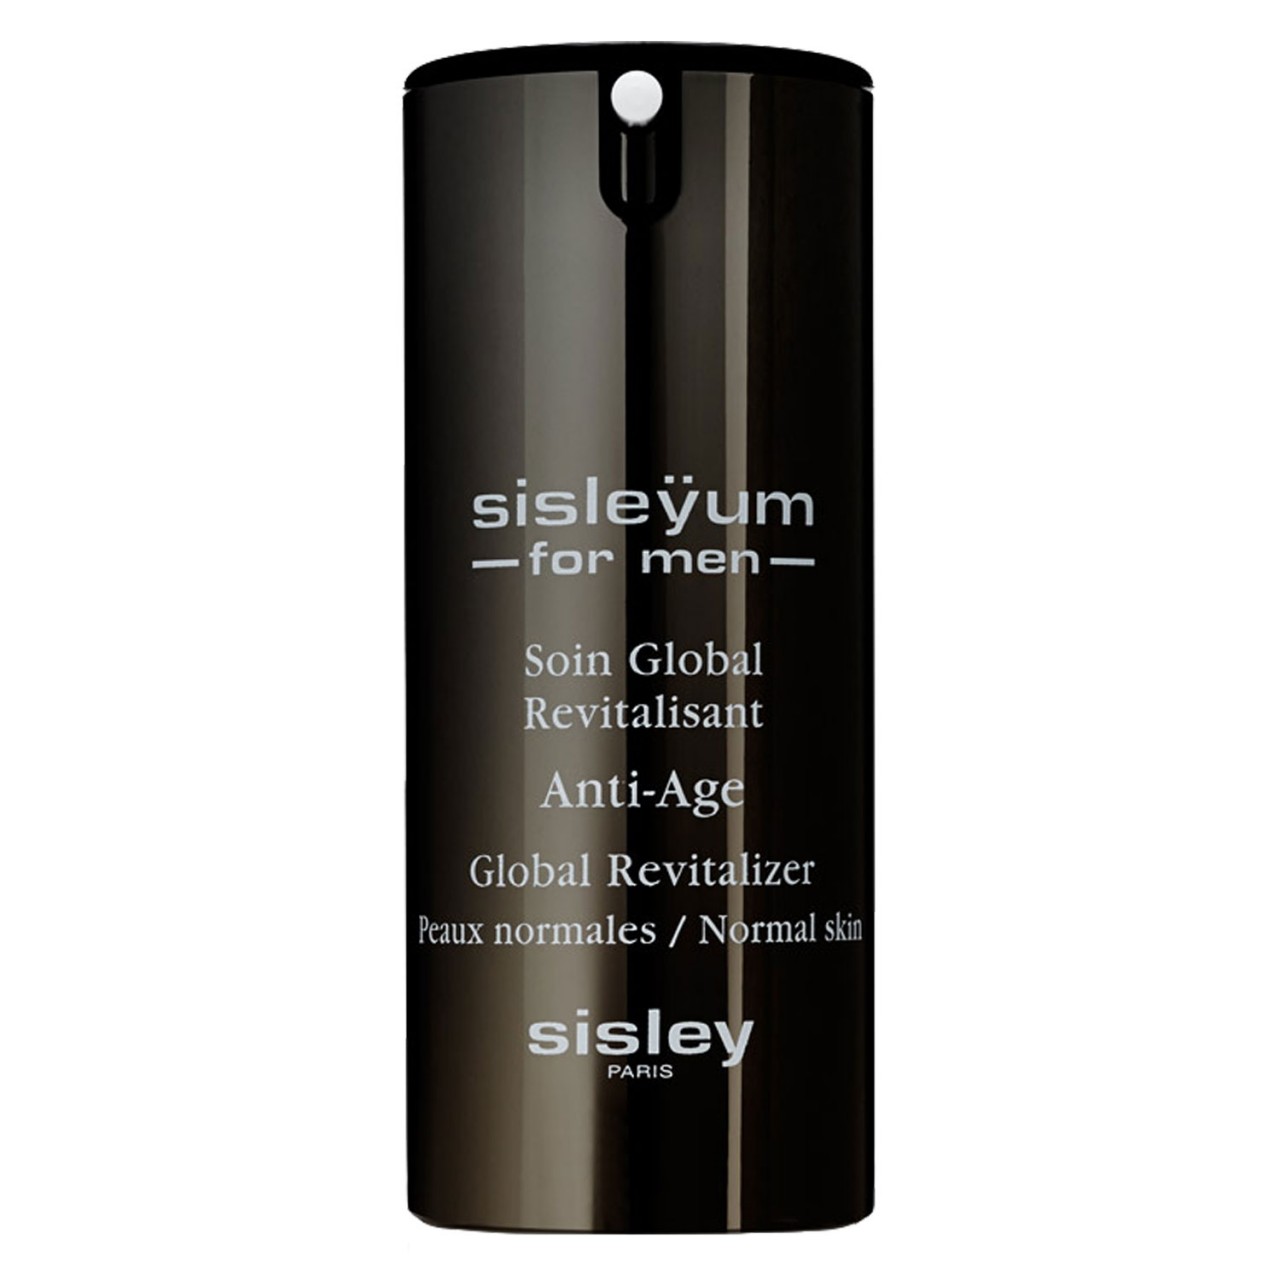 Sisleÿum - For Men Soin Global Revitalisant peaux normales von SISLEY